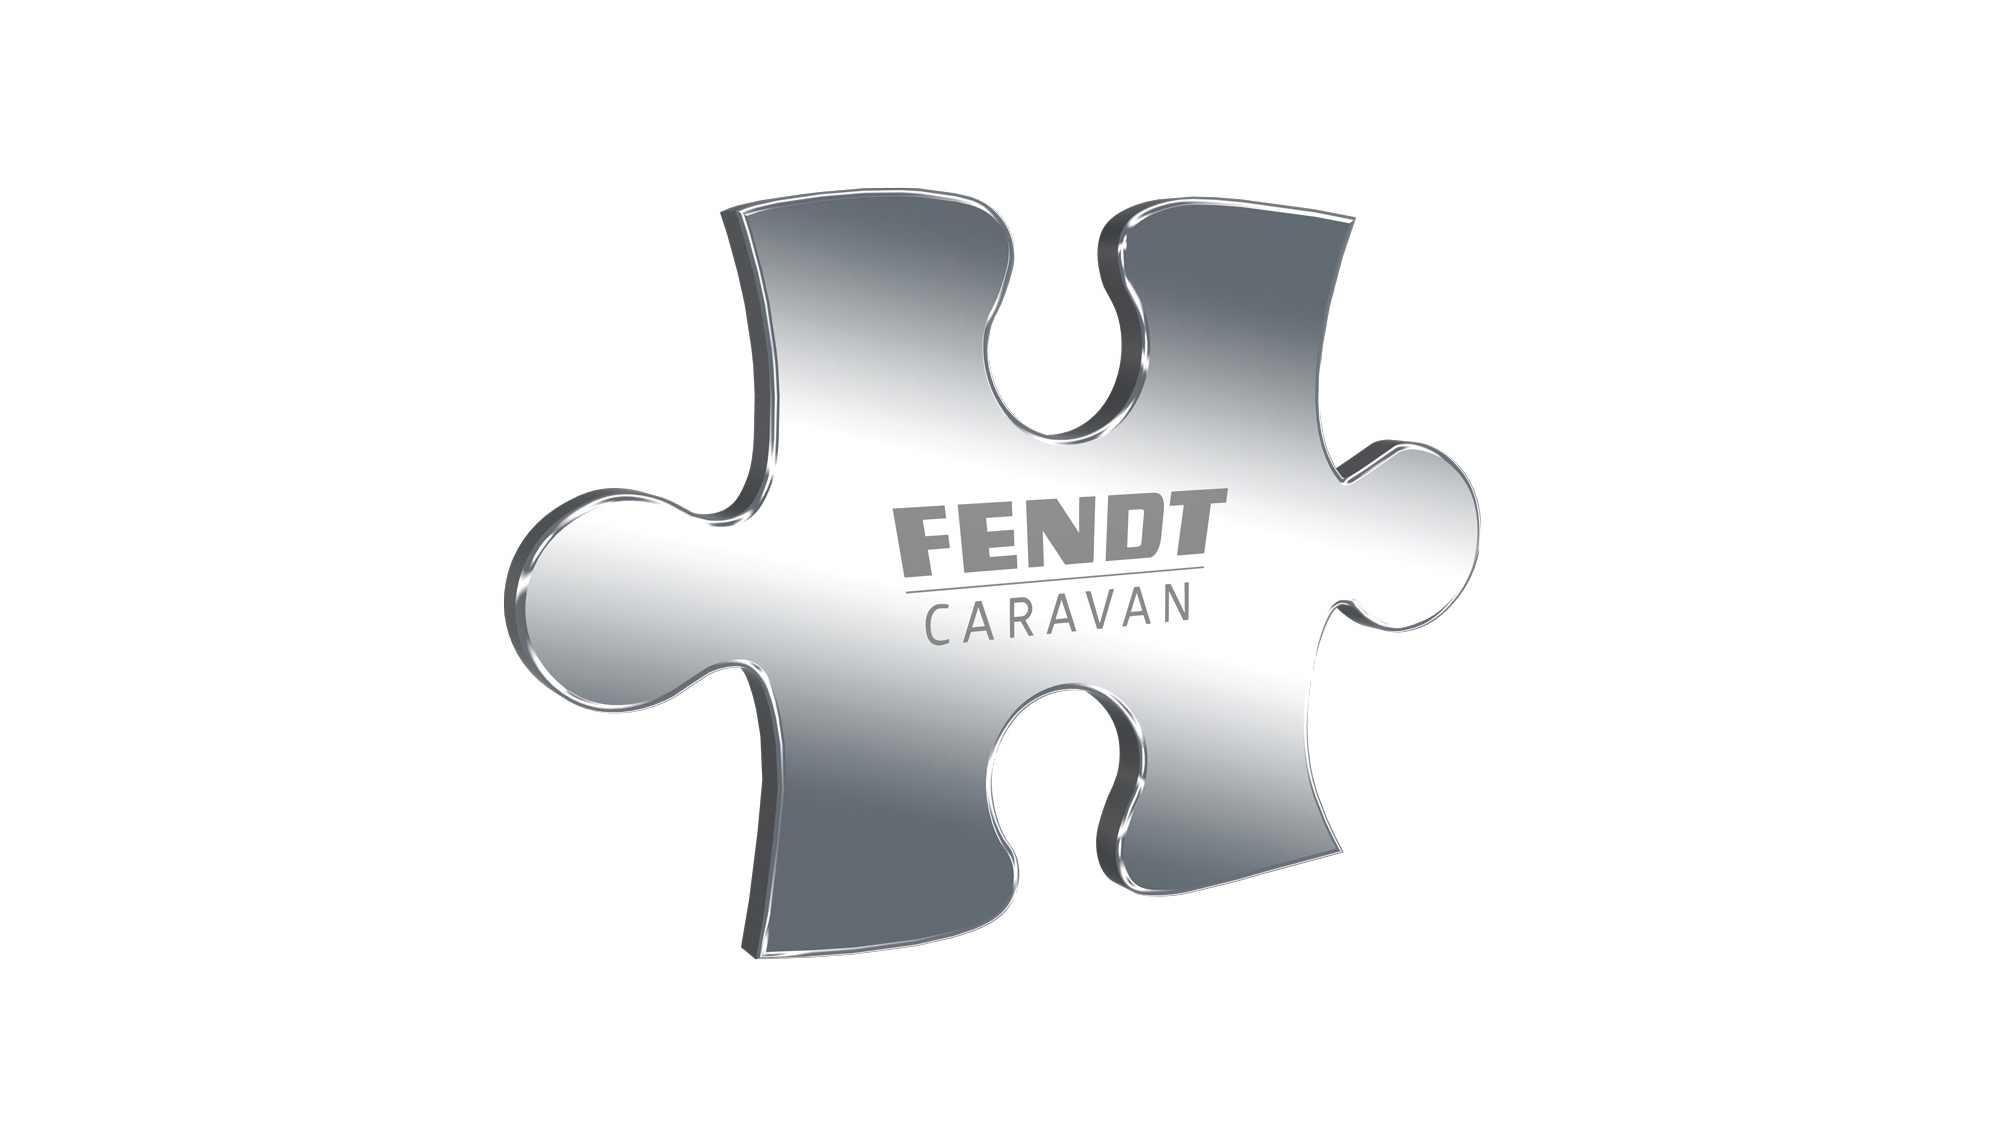 Metall-Puzzleteil mit dem Fendt-Caravan-Logo